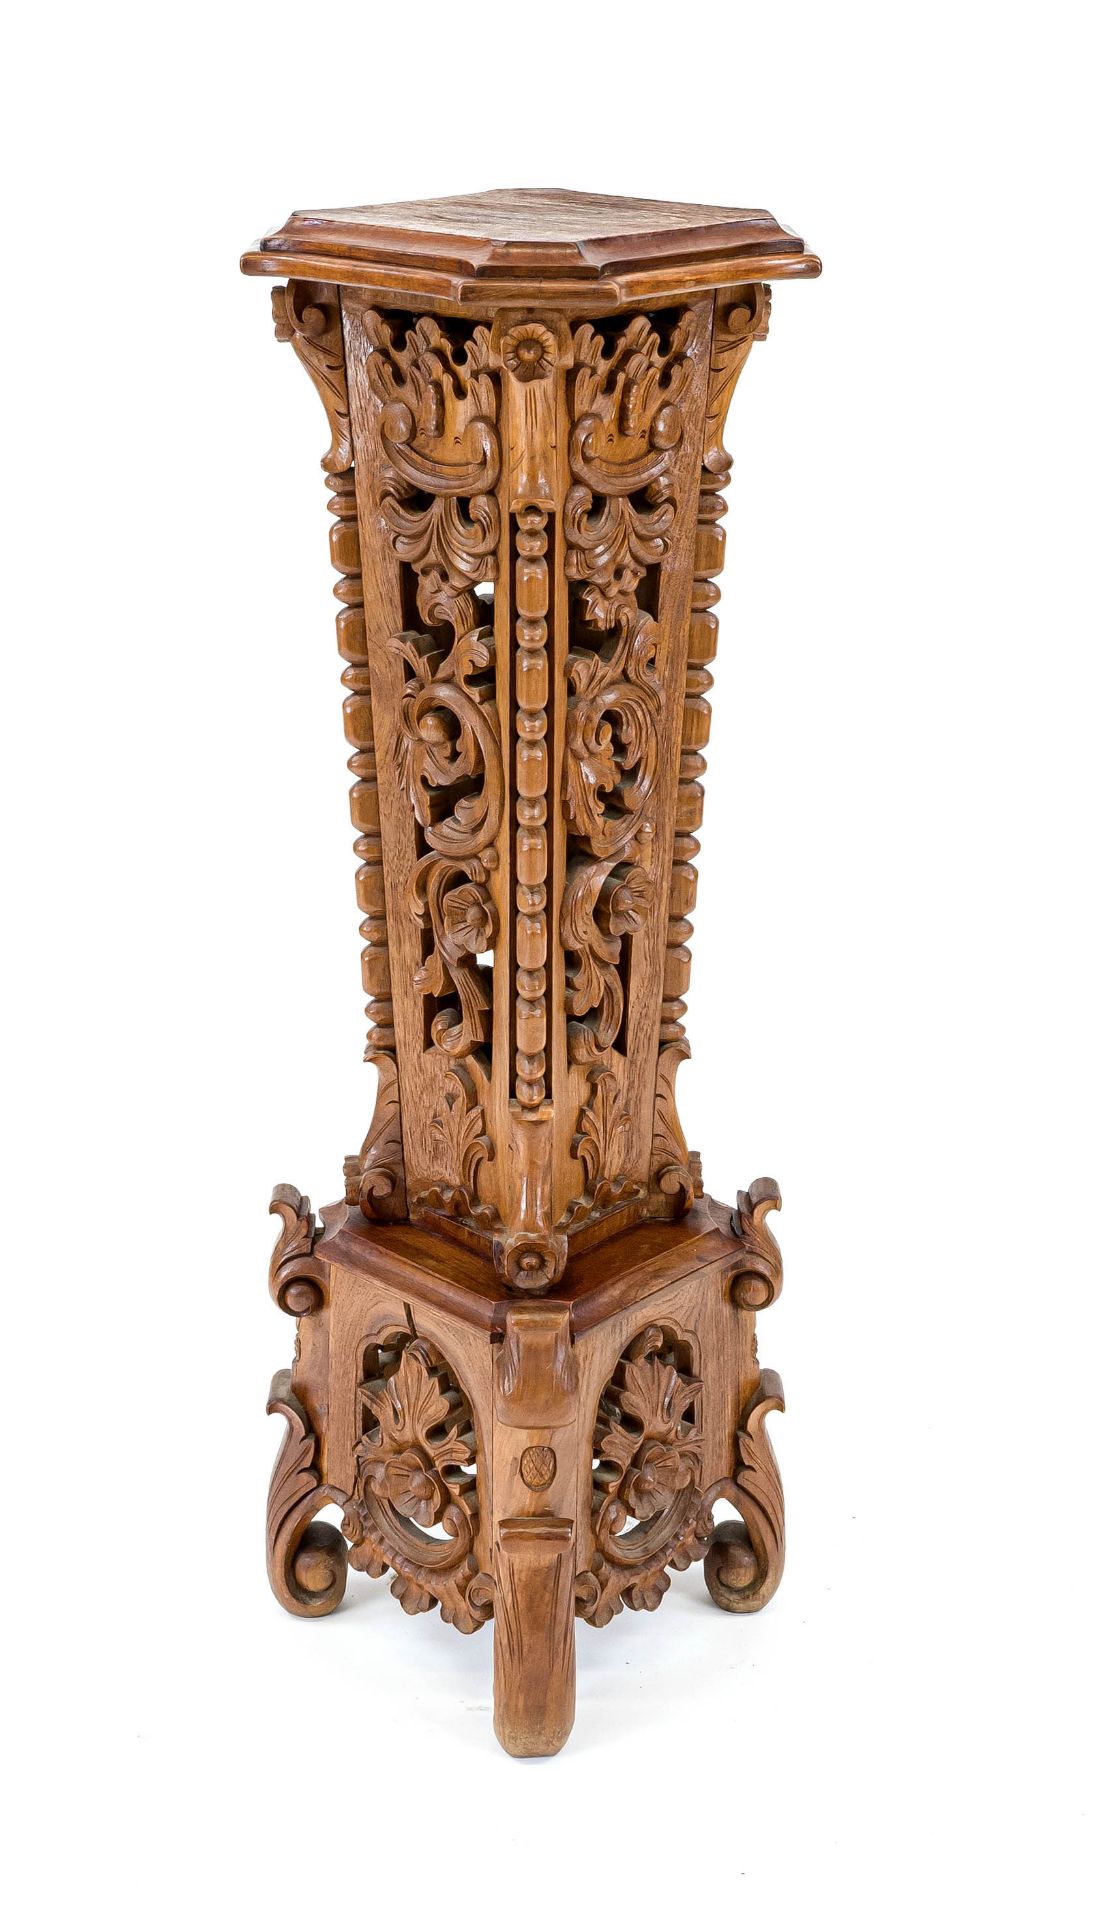 Palm pedestal, 20th century, walnut, richly florally carved, 104 x 31 x 31 cm